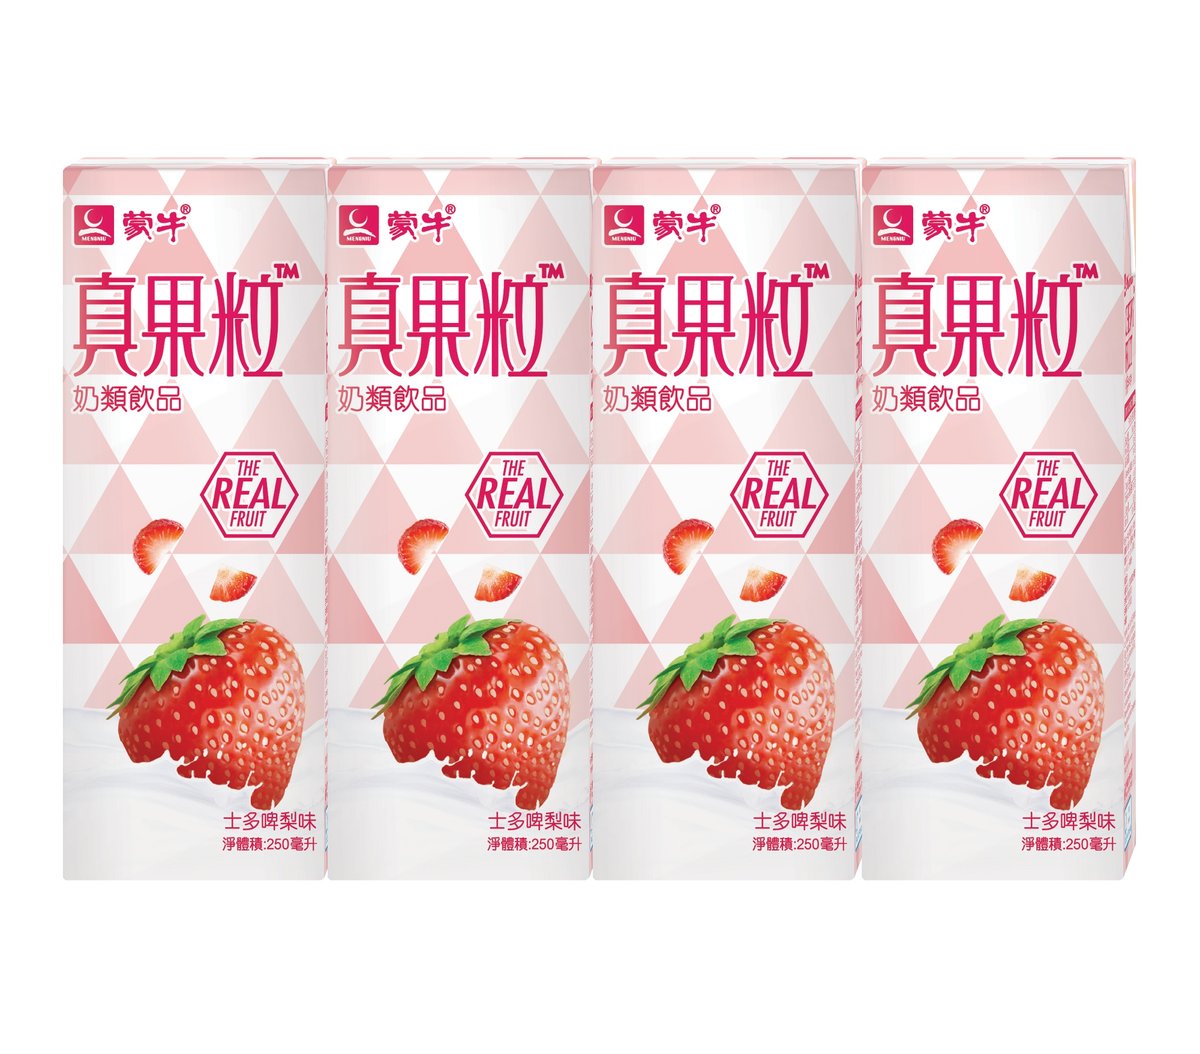 Chewy Fruit Milk Beverage - Strawberry Flavor